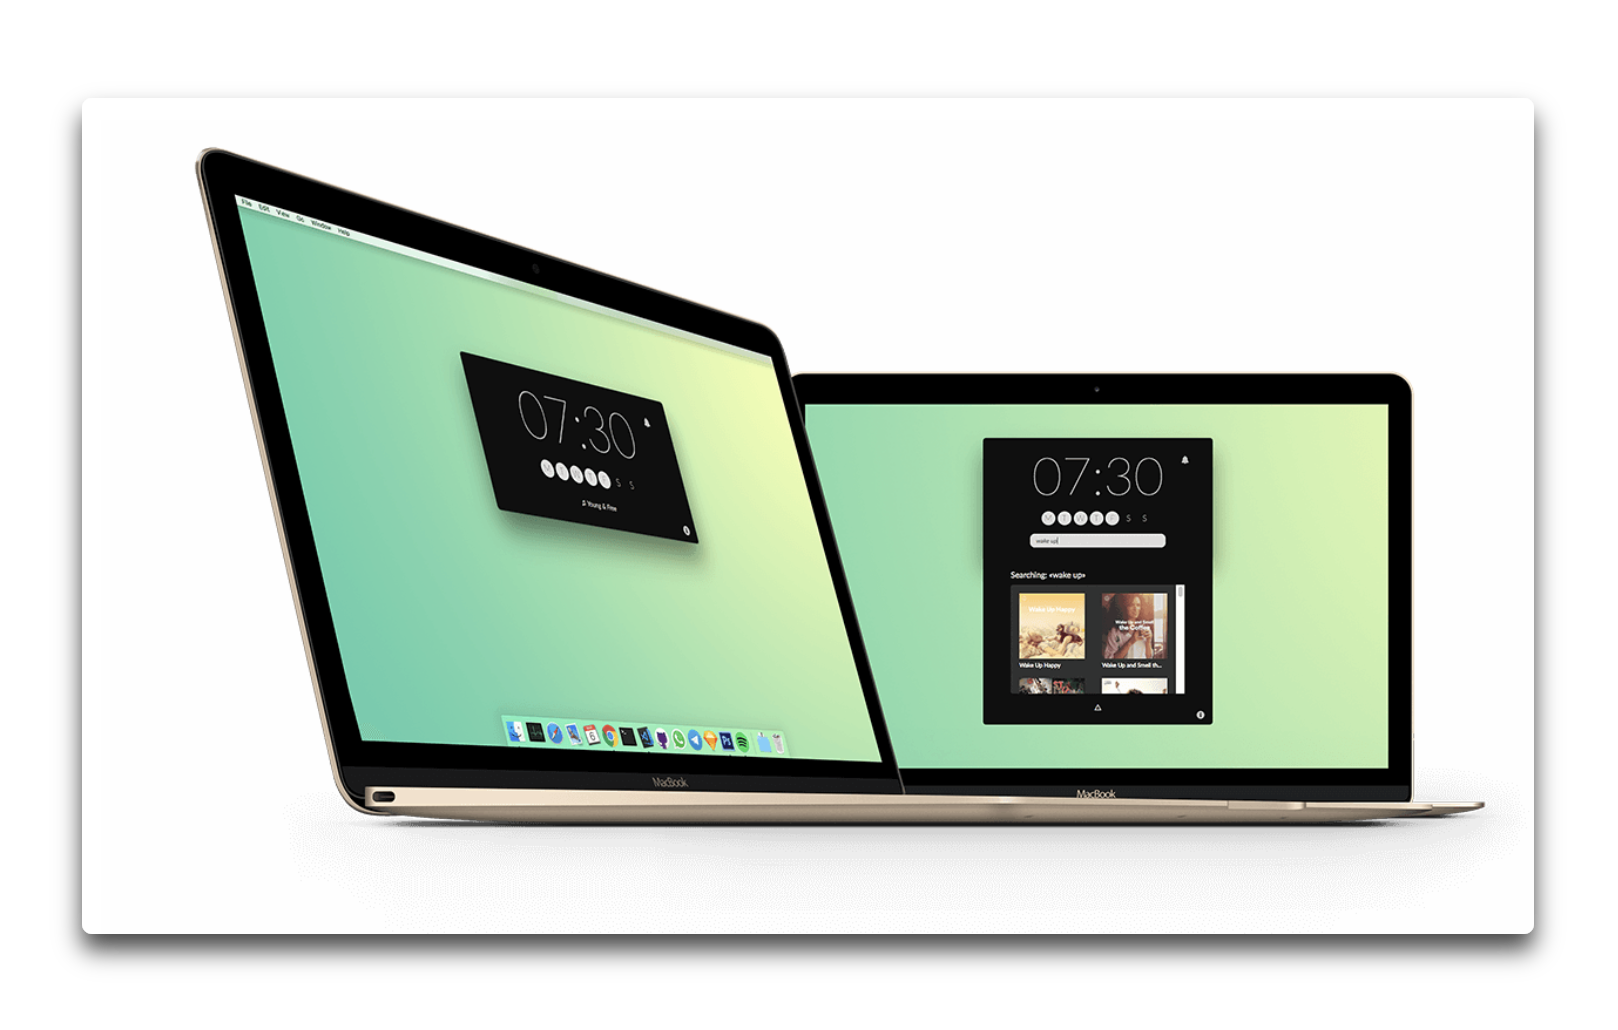 【Mac】Spotifyを「時計付きラジオ」にする無料のMacアプリ「Wakefy」